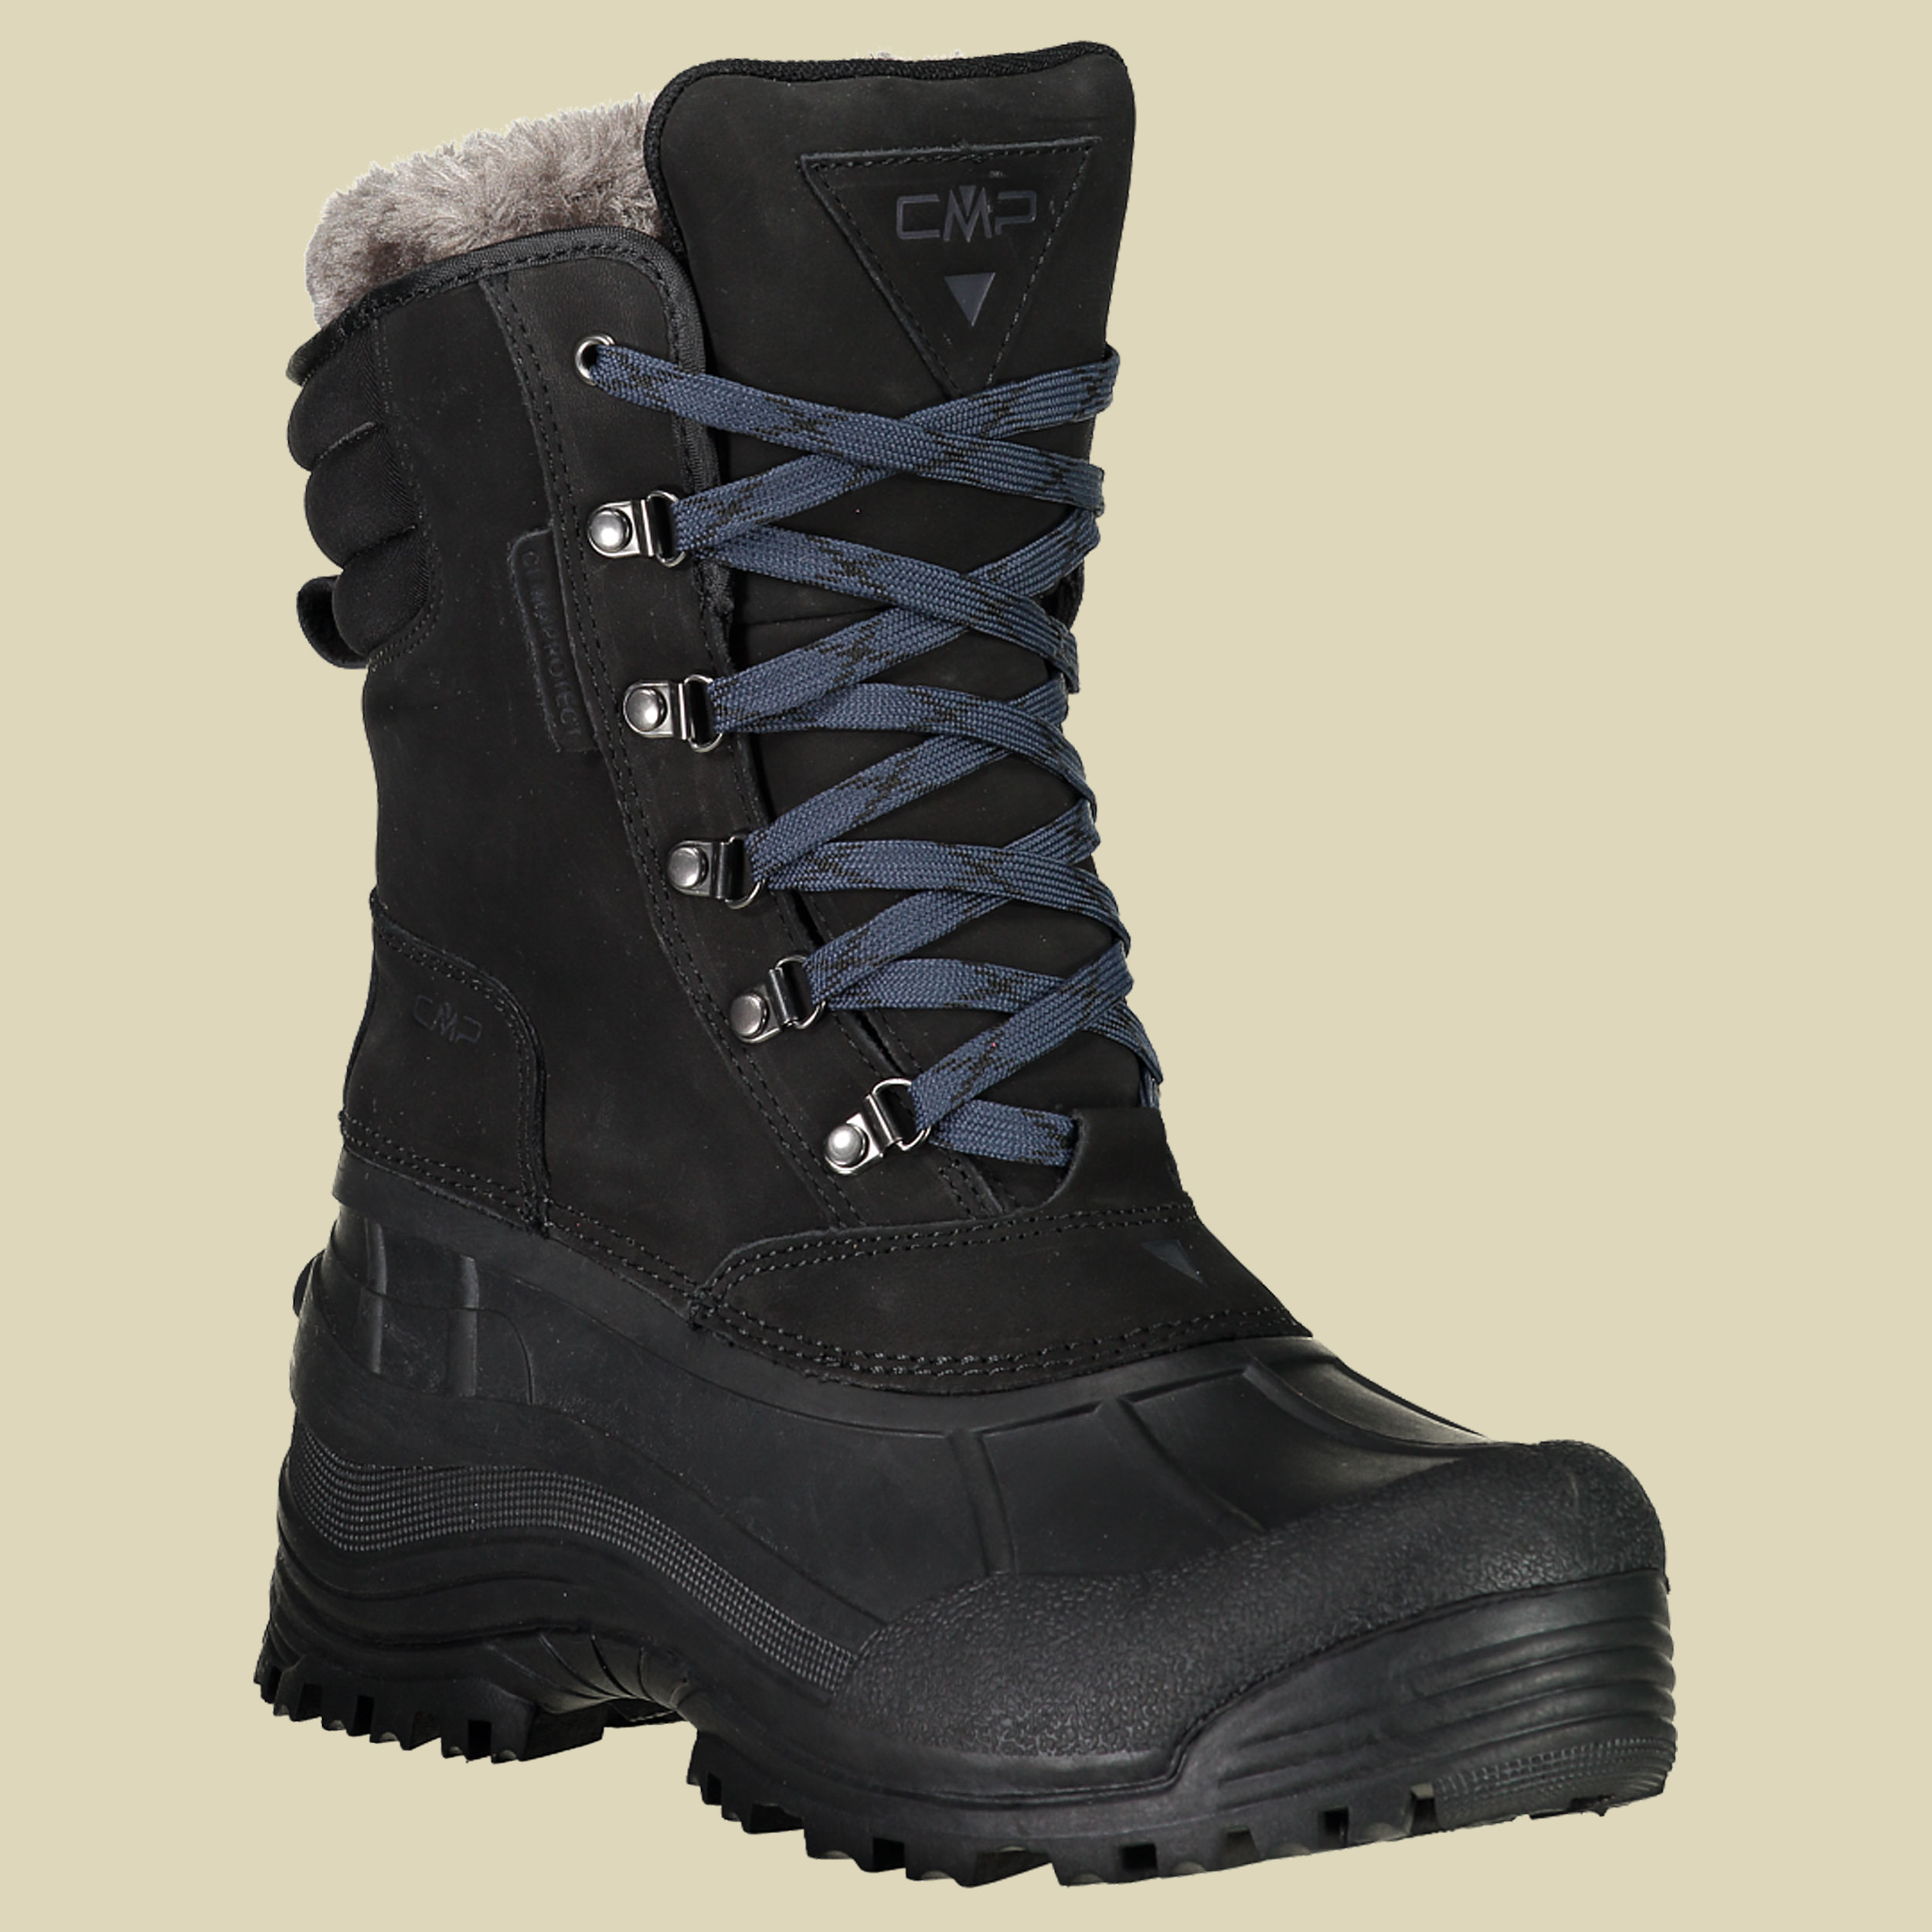 Kinos Snow Boots WP Men Größe 45 Farbe U901 black